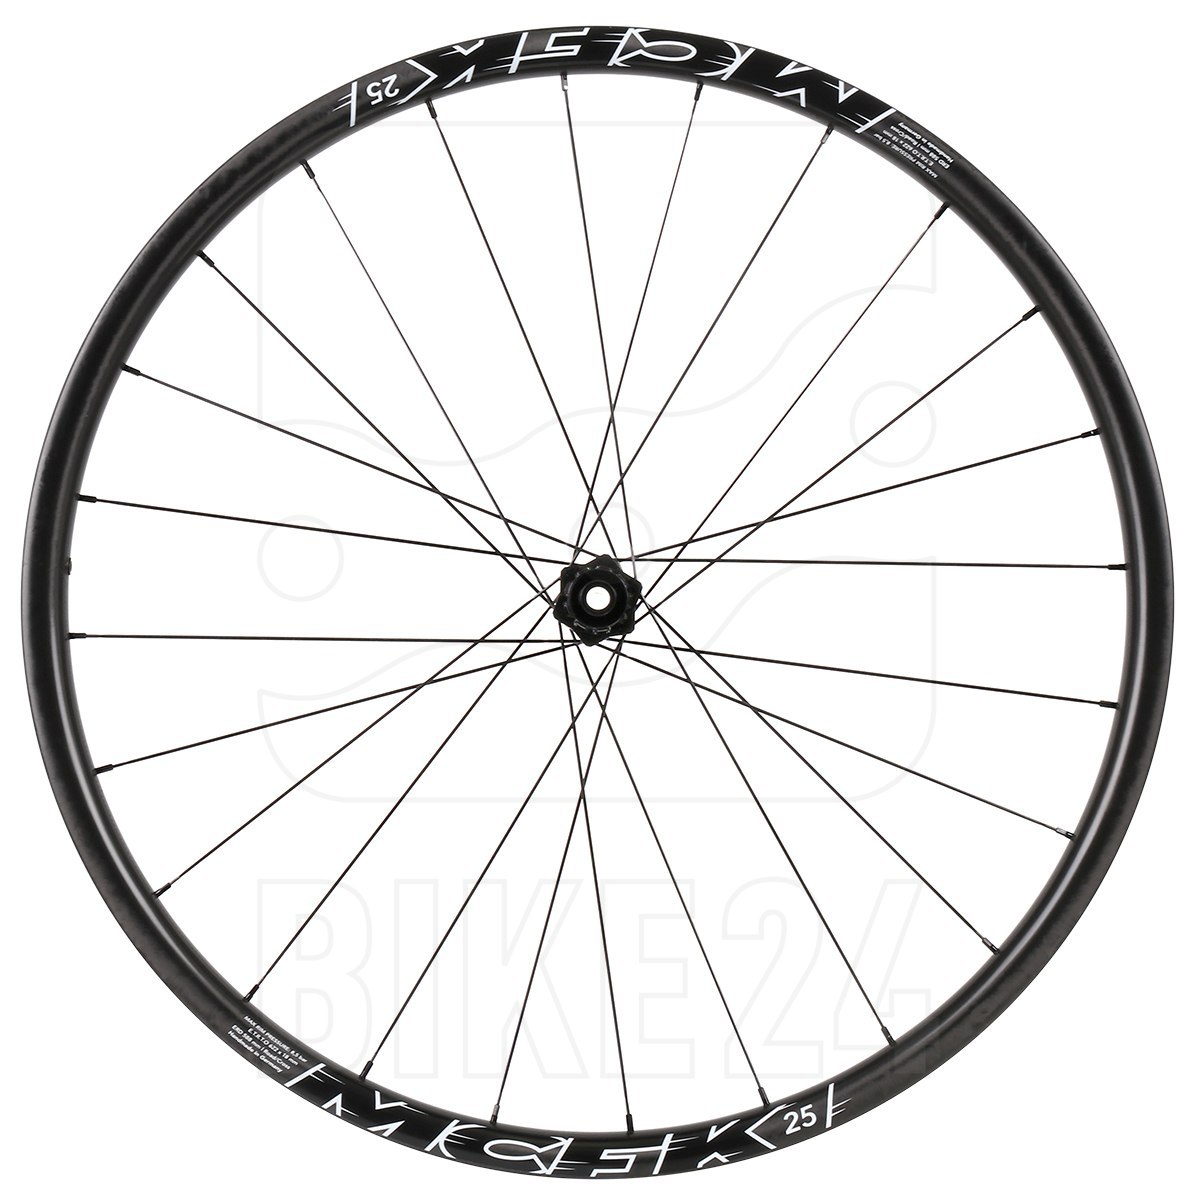 Productfoto van Mcfk Cross Carbon Rear Wheel - SP - Clincher - Centerlock - DT Swiss 240s - 12x142mm - UD Matte